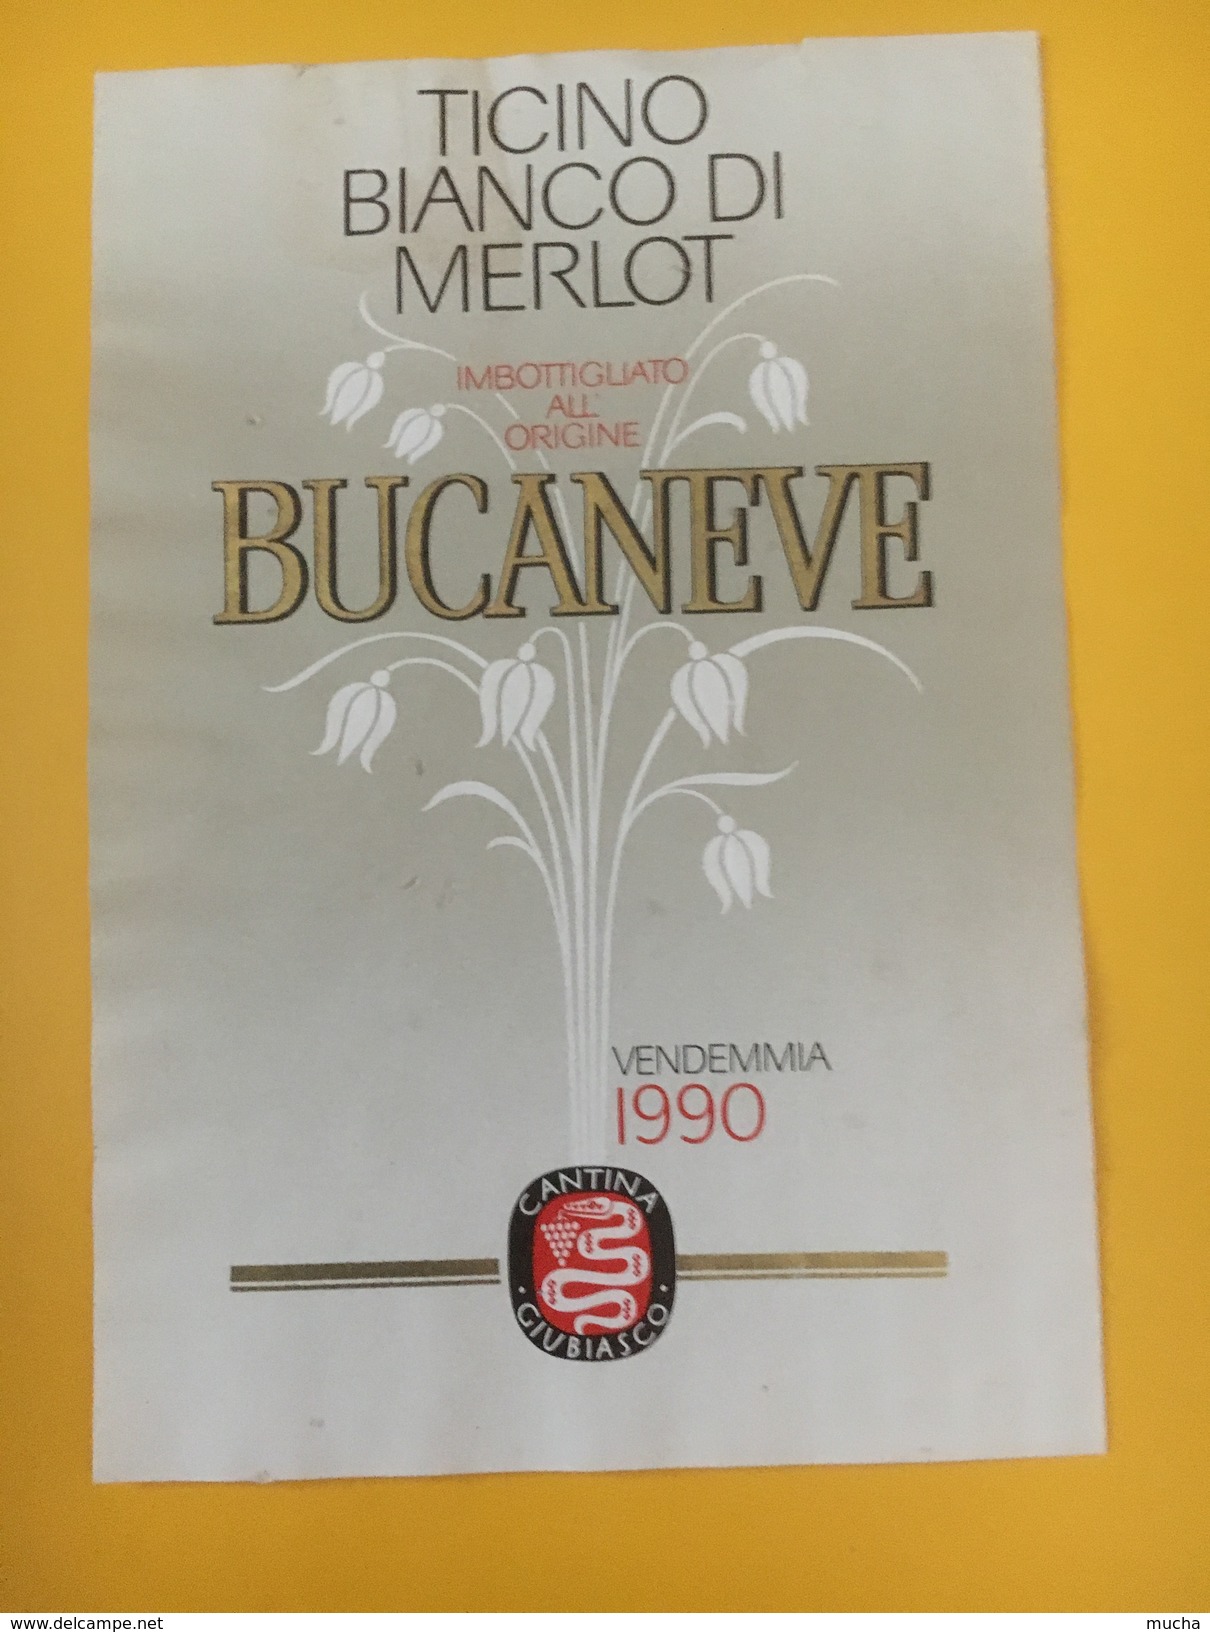 5541 - Bucaneve 1990 Bianco Di Merlot Ticino Suisse - Flowers